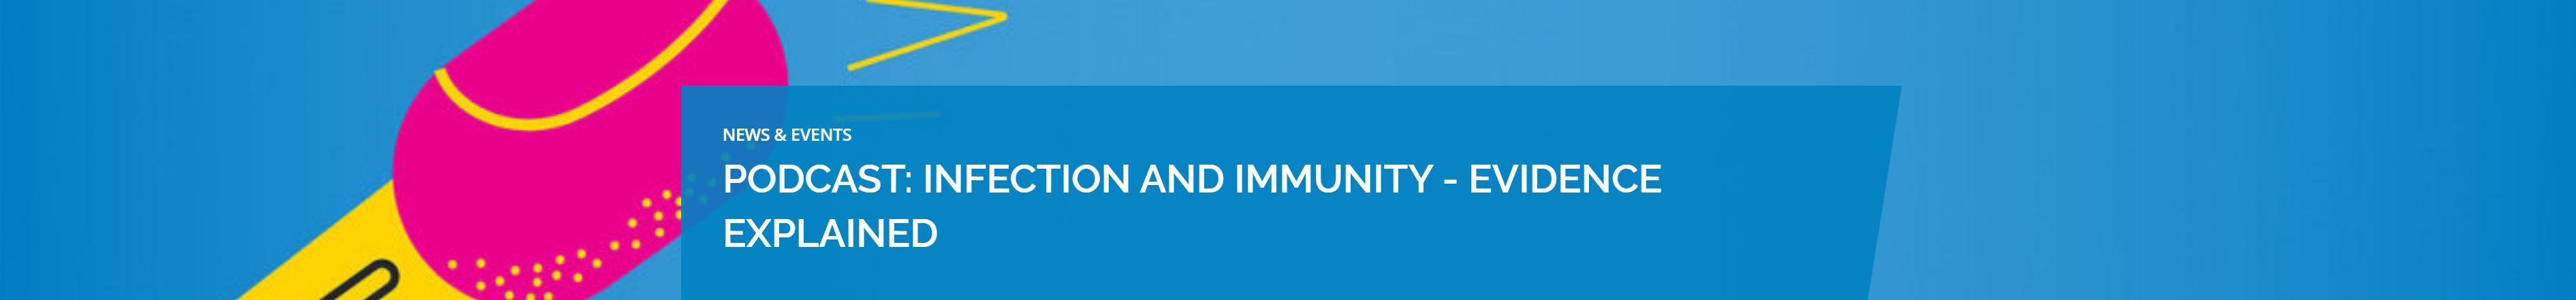 Podcast: Infection and immunity - evidence explained